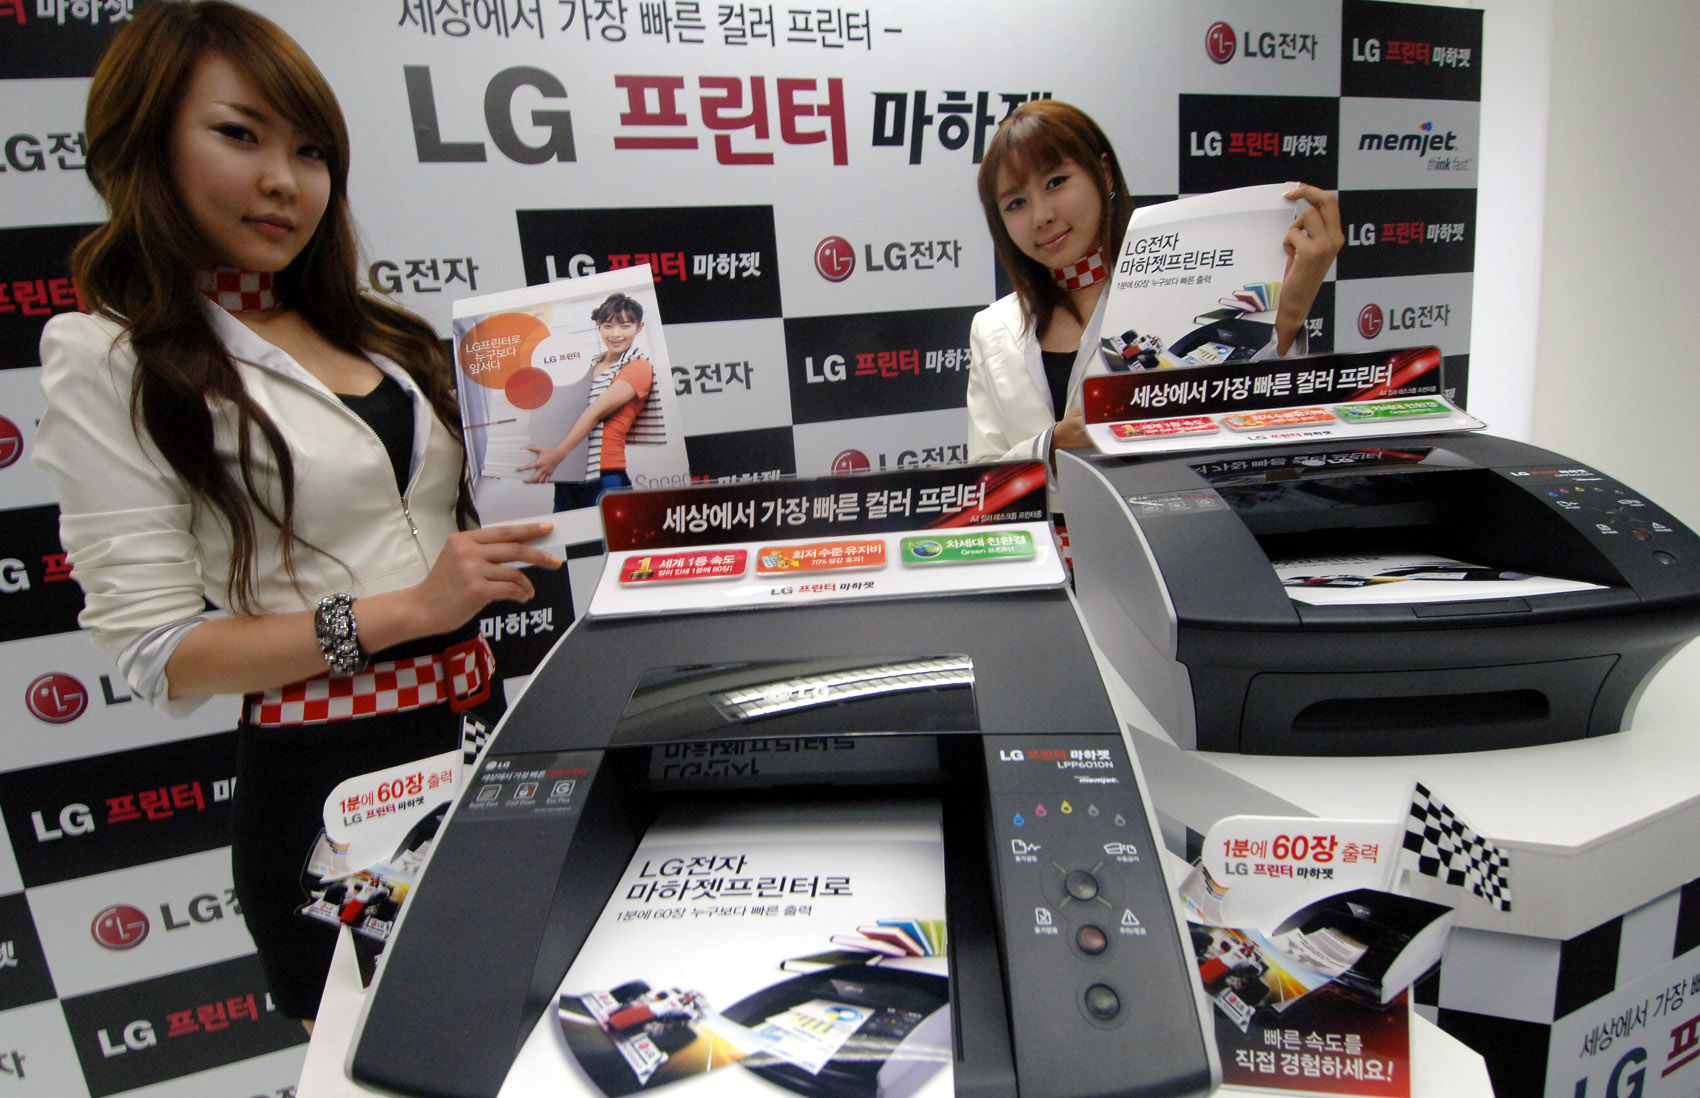 Two models introducing the LG A4 color desktop printer LG Machjet